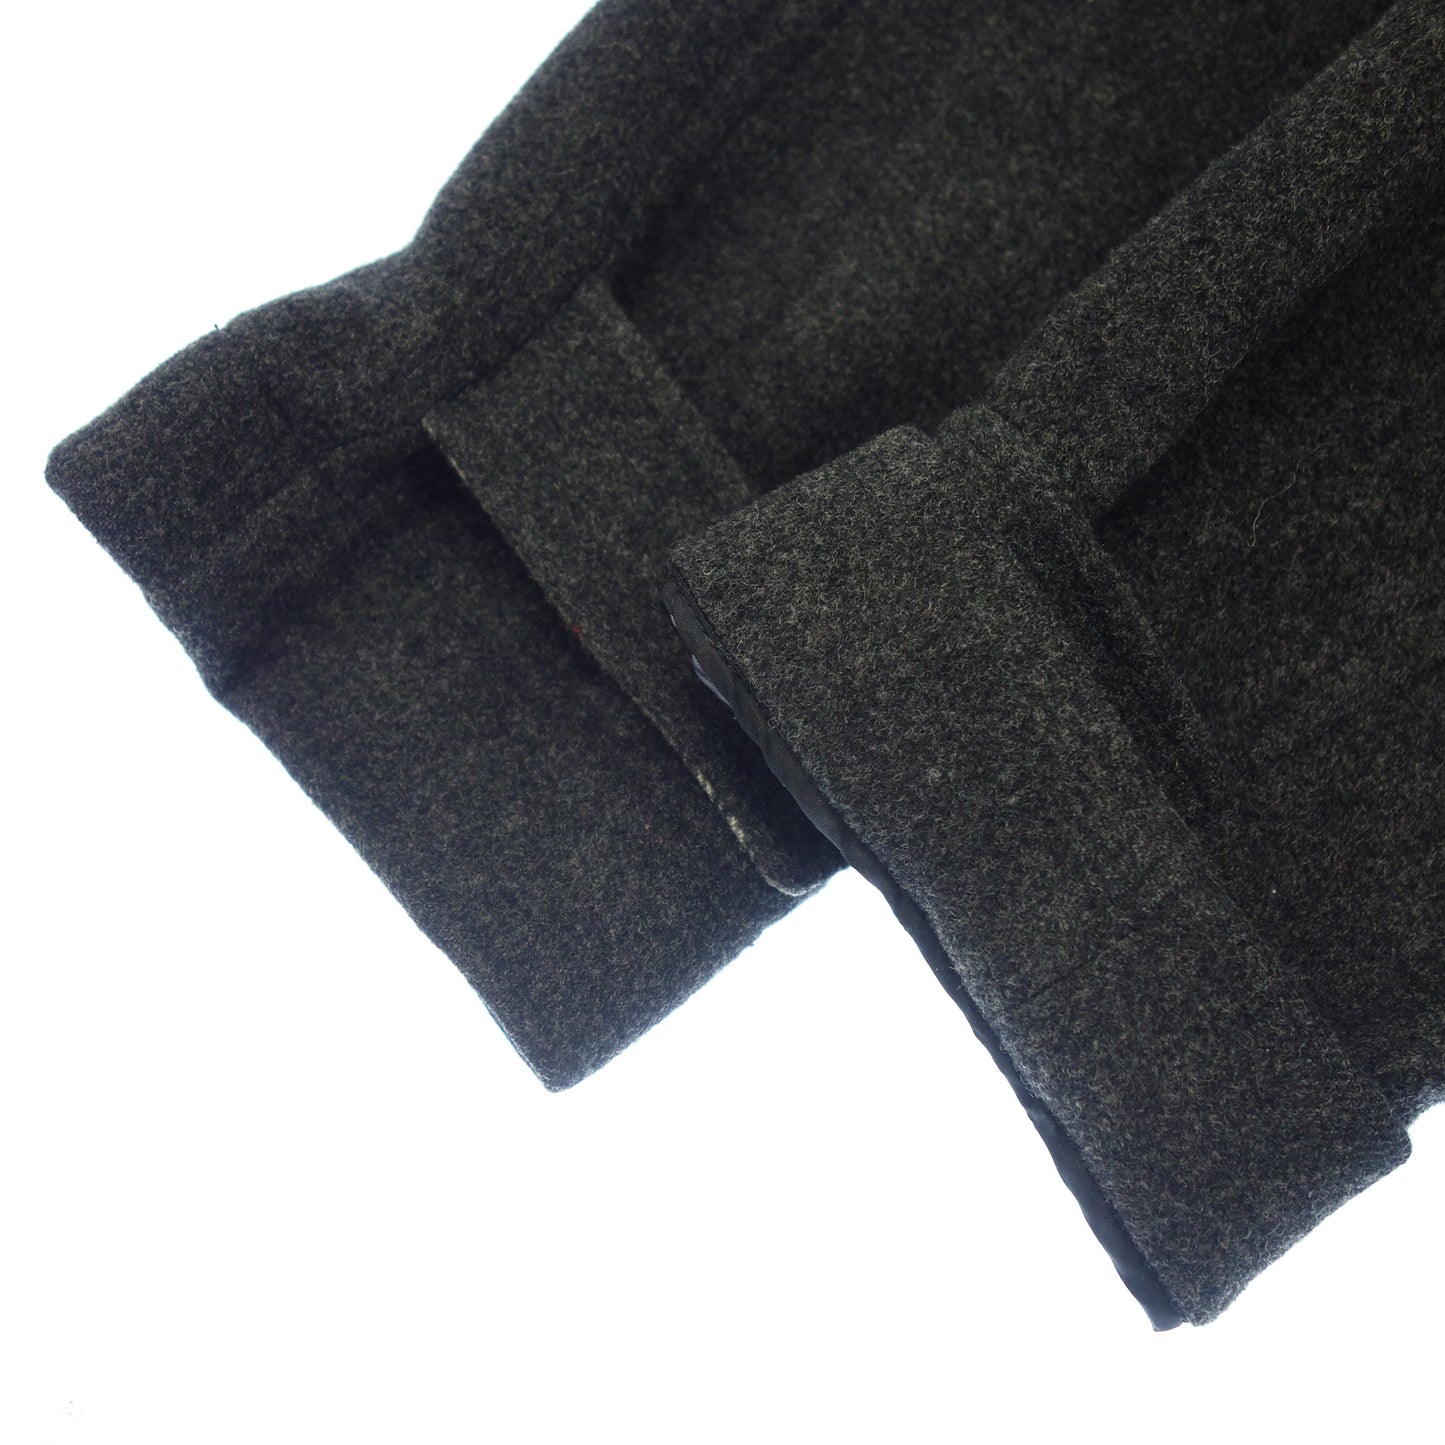 Good condition ◆ Burberry Black Label Duffle Coat Nova Check Lambswool Men's Gray Size L BURBERRY BLACK LABEL [AFA20] 